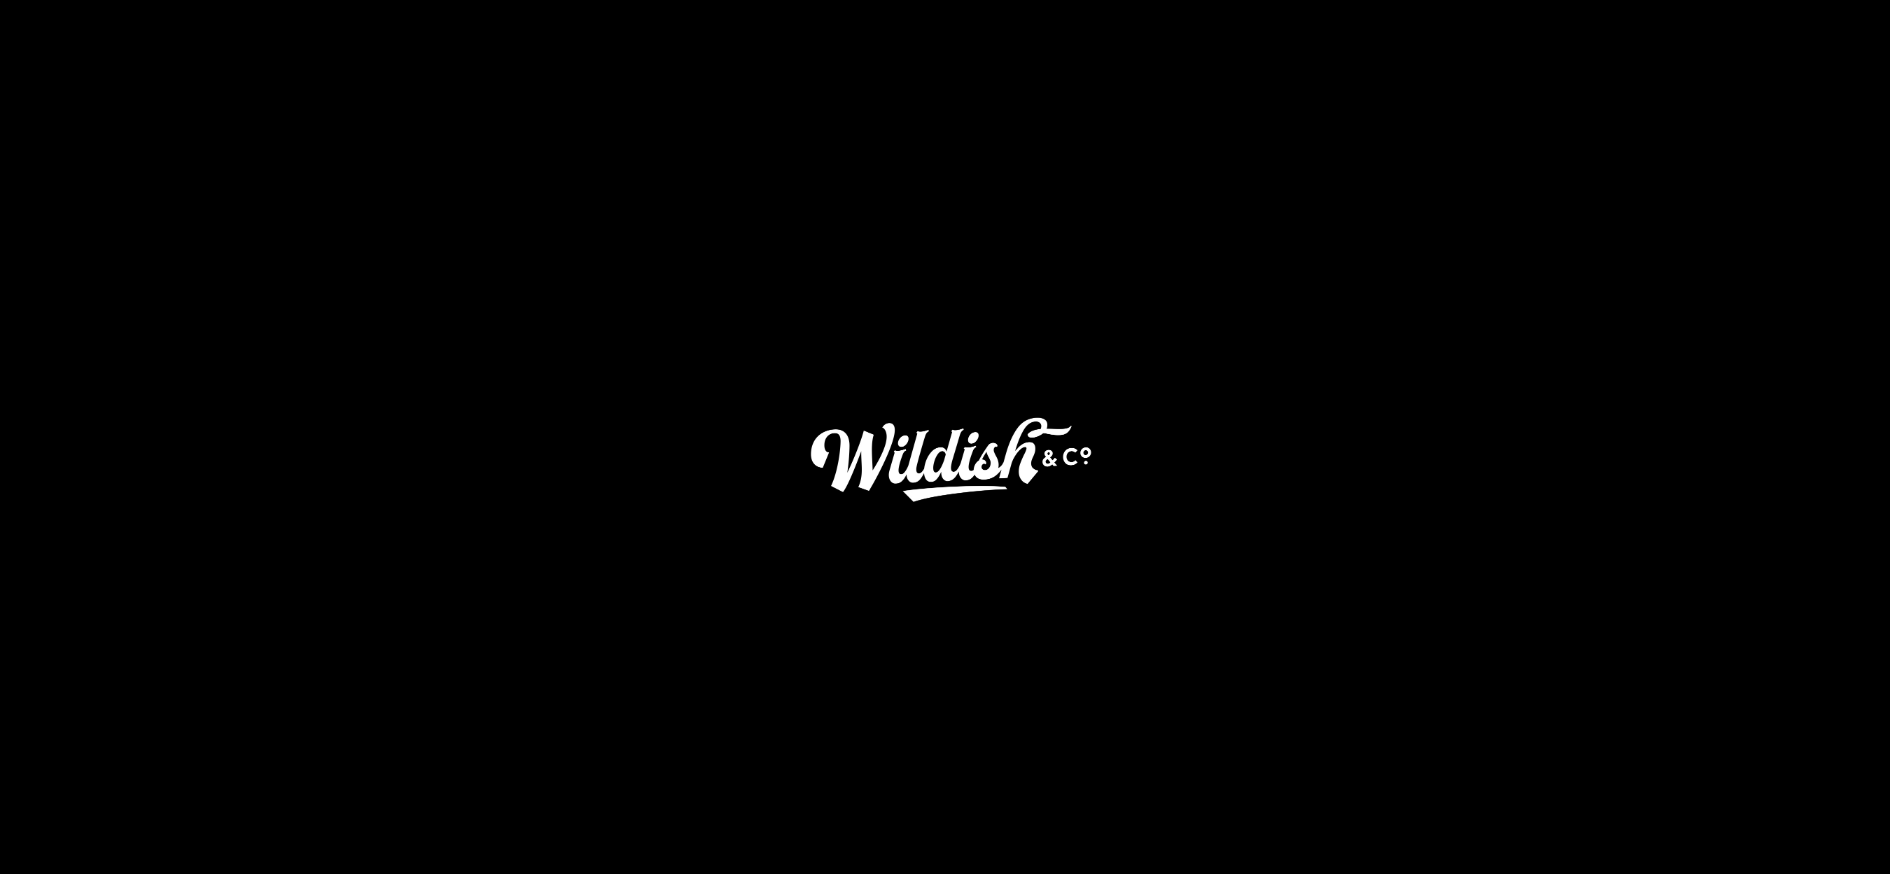 Wildish & Co.